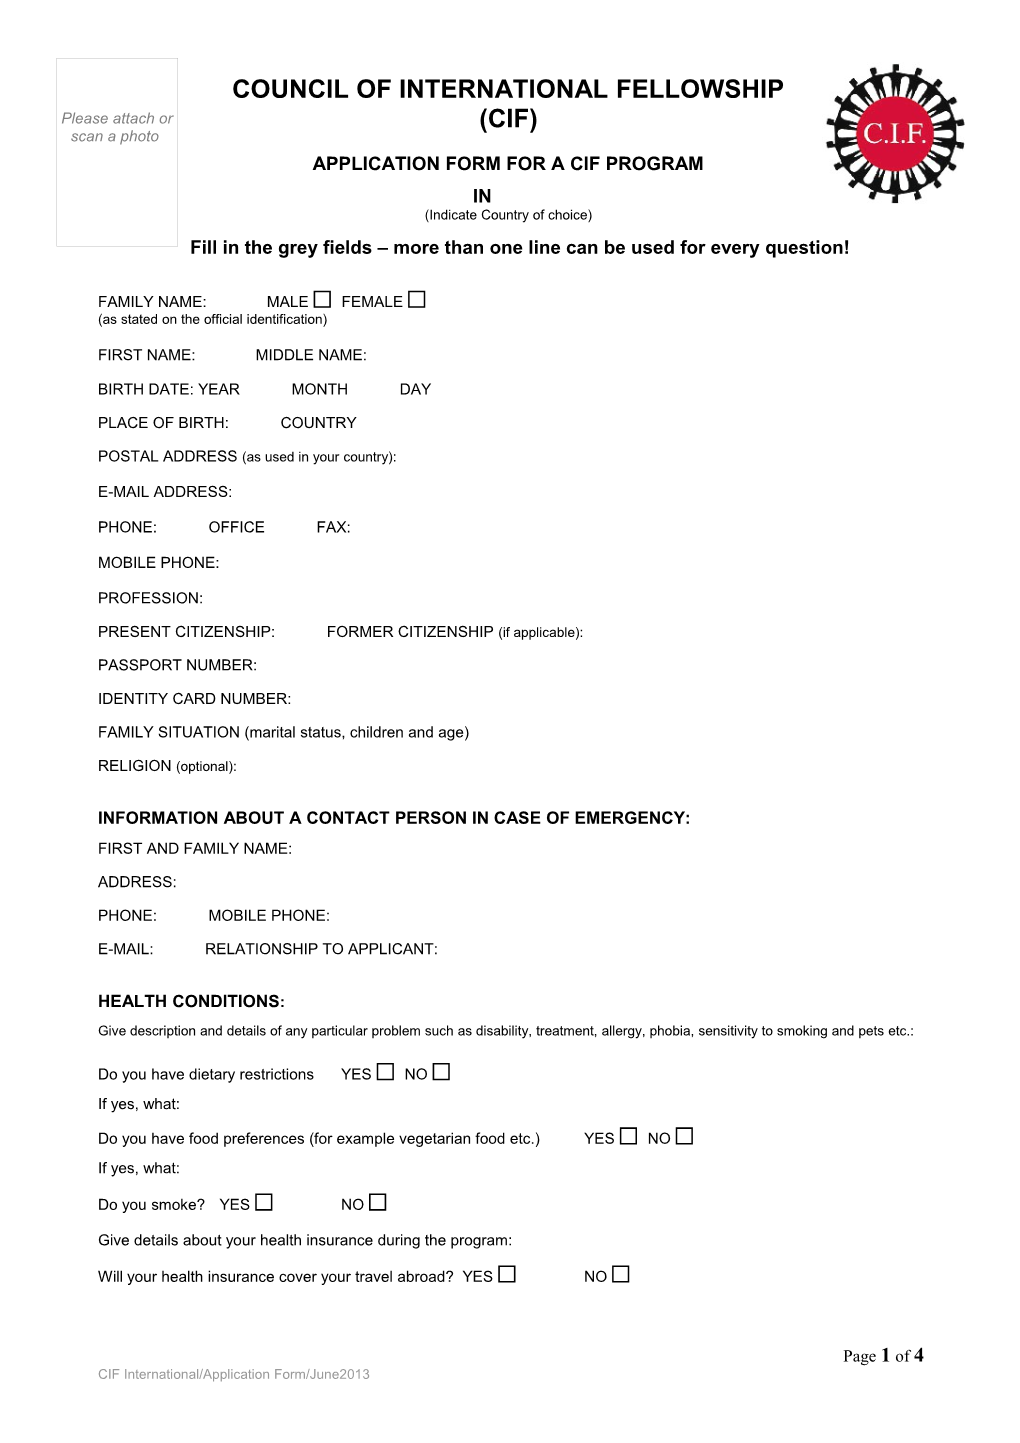 CIF Application Form October 2005